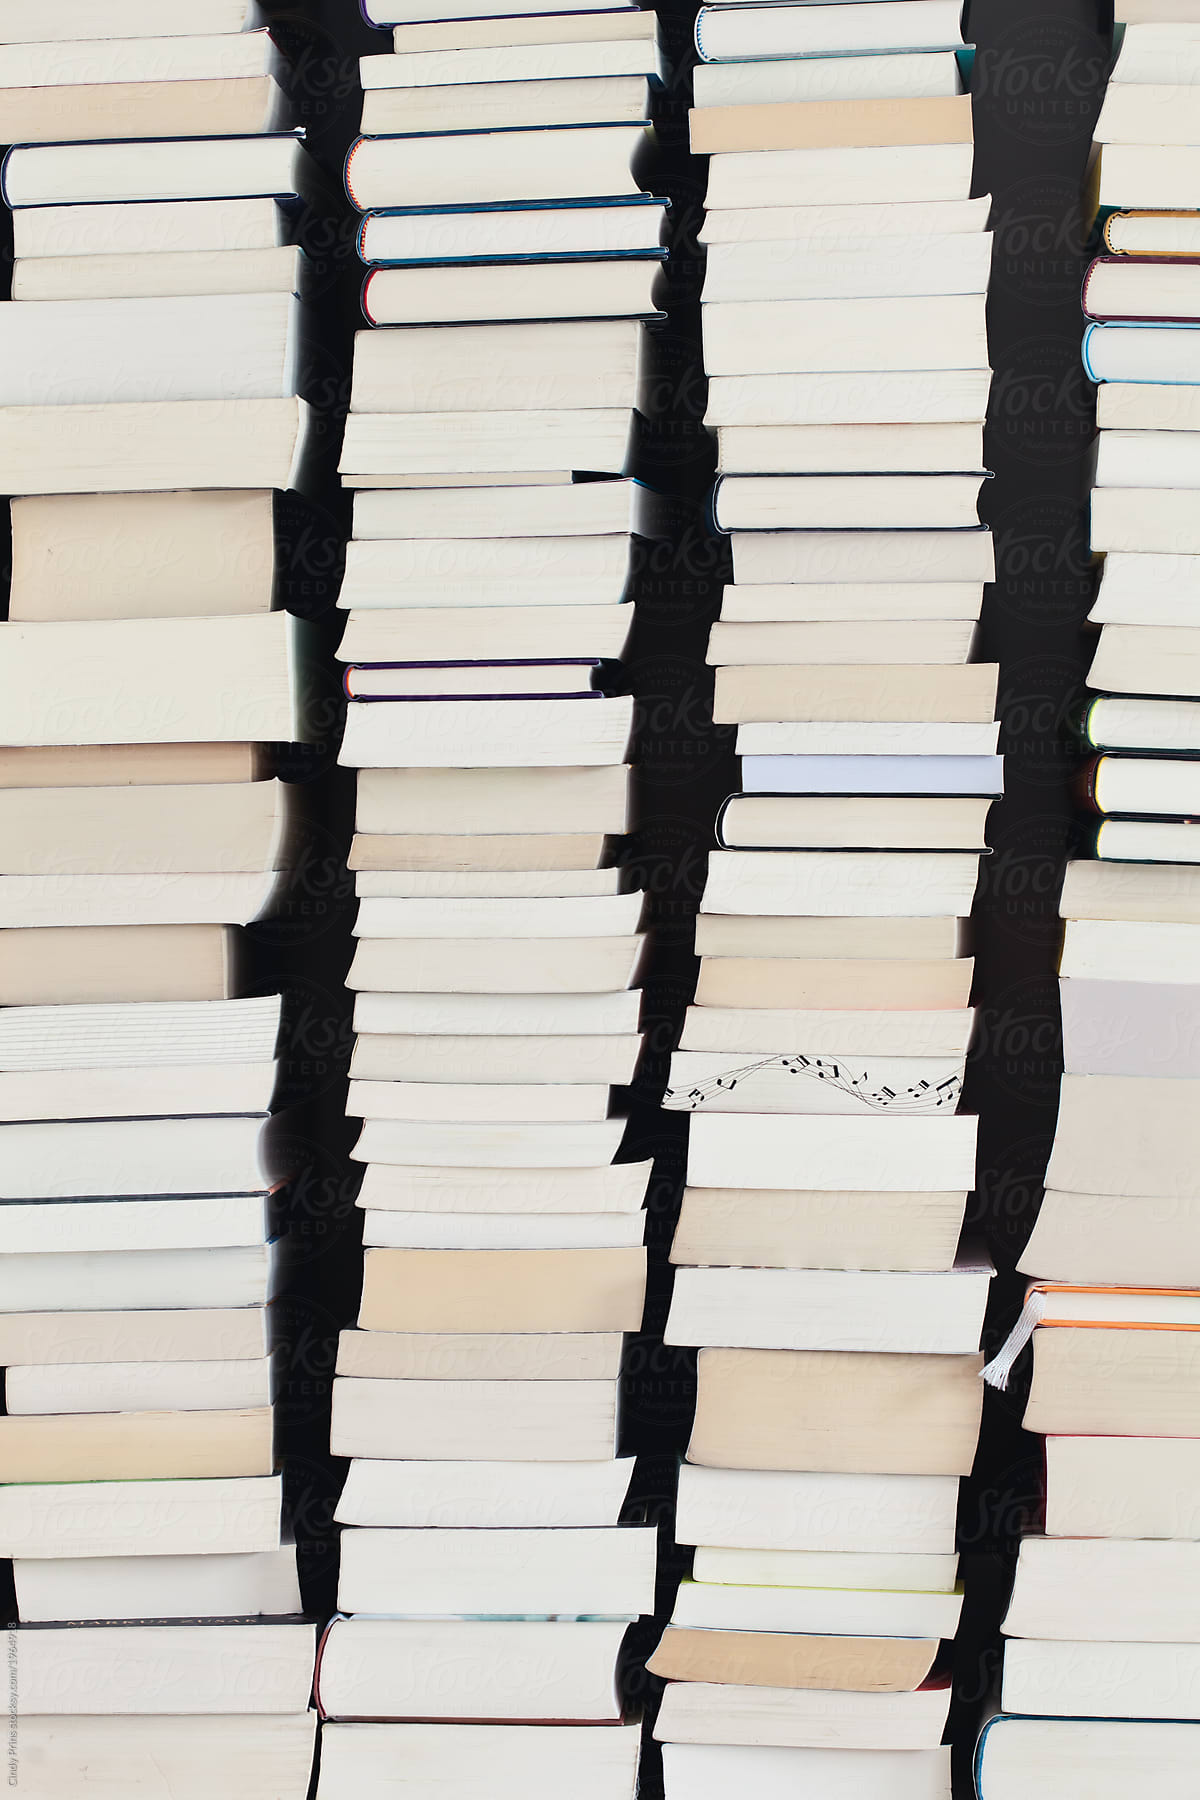 Closeup of piles of books